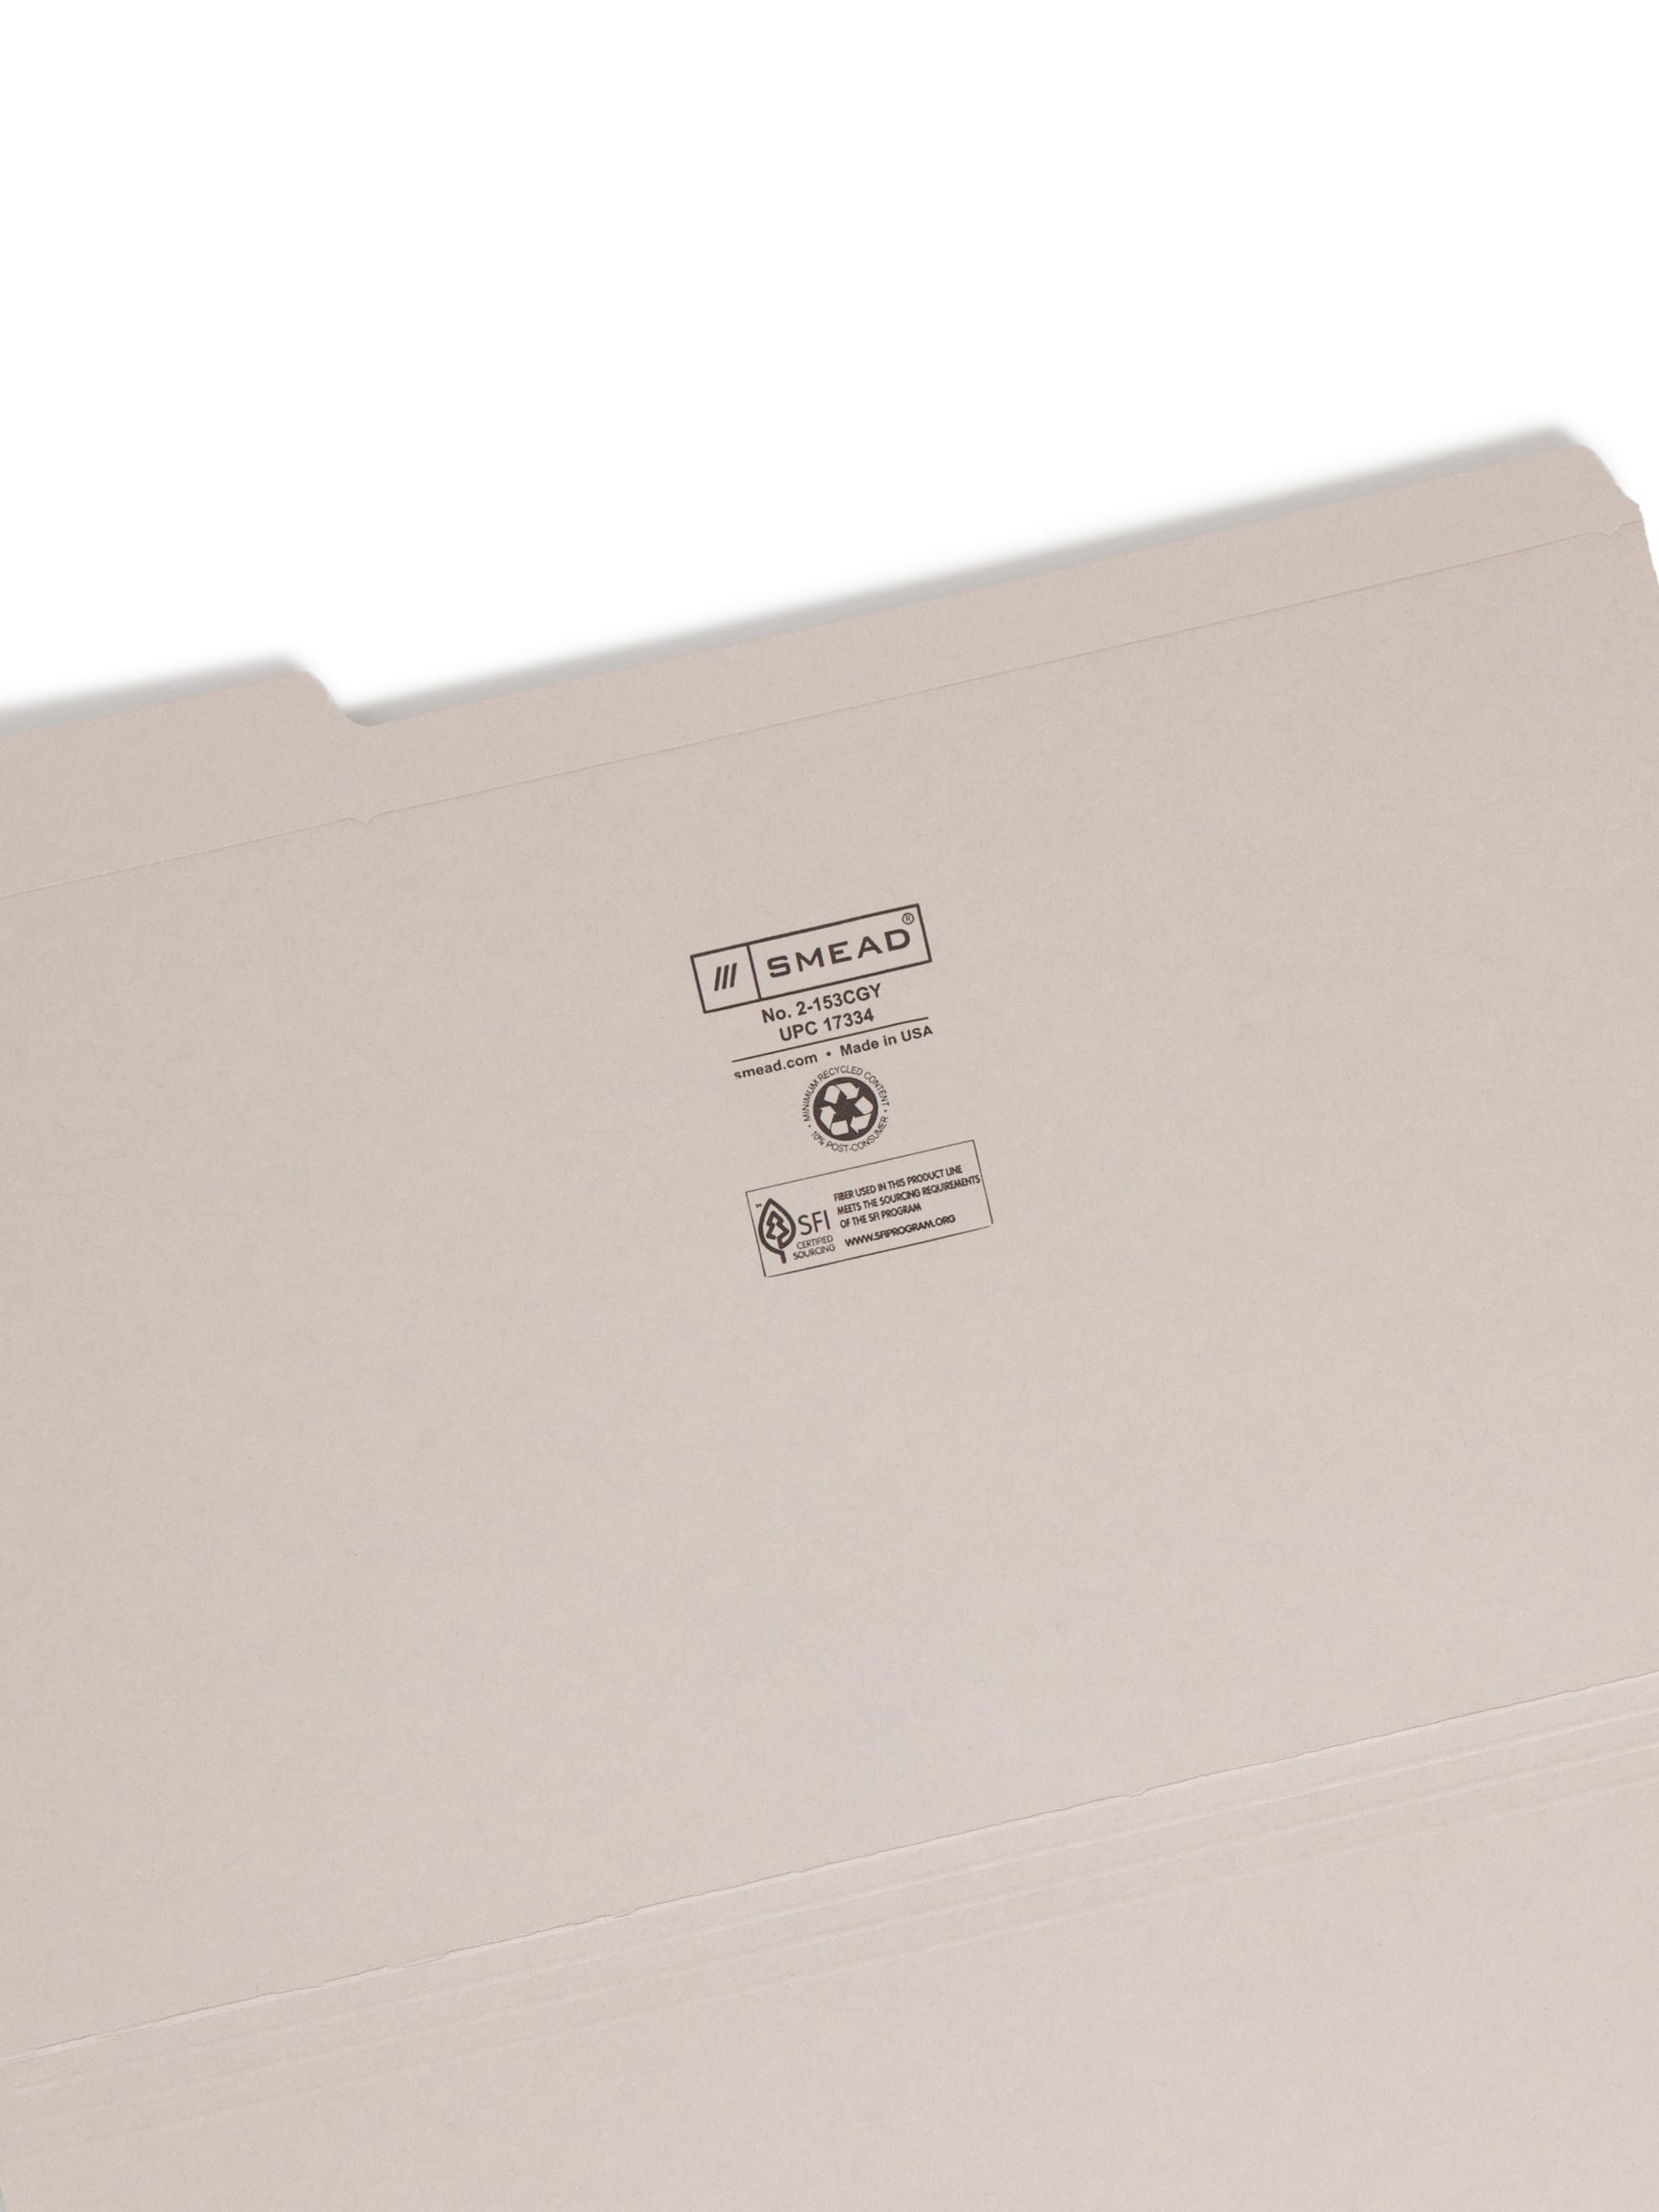 Reinforced Tab File Folders, 1/3-Cut Tab, Gray Color, Legal Size, Set of 100, 086486173346